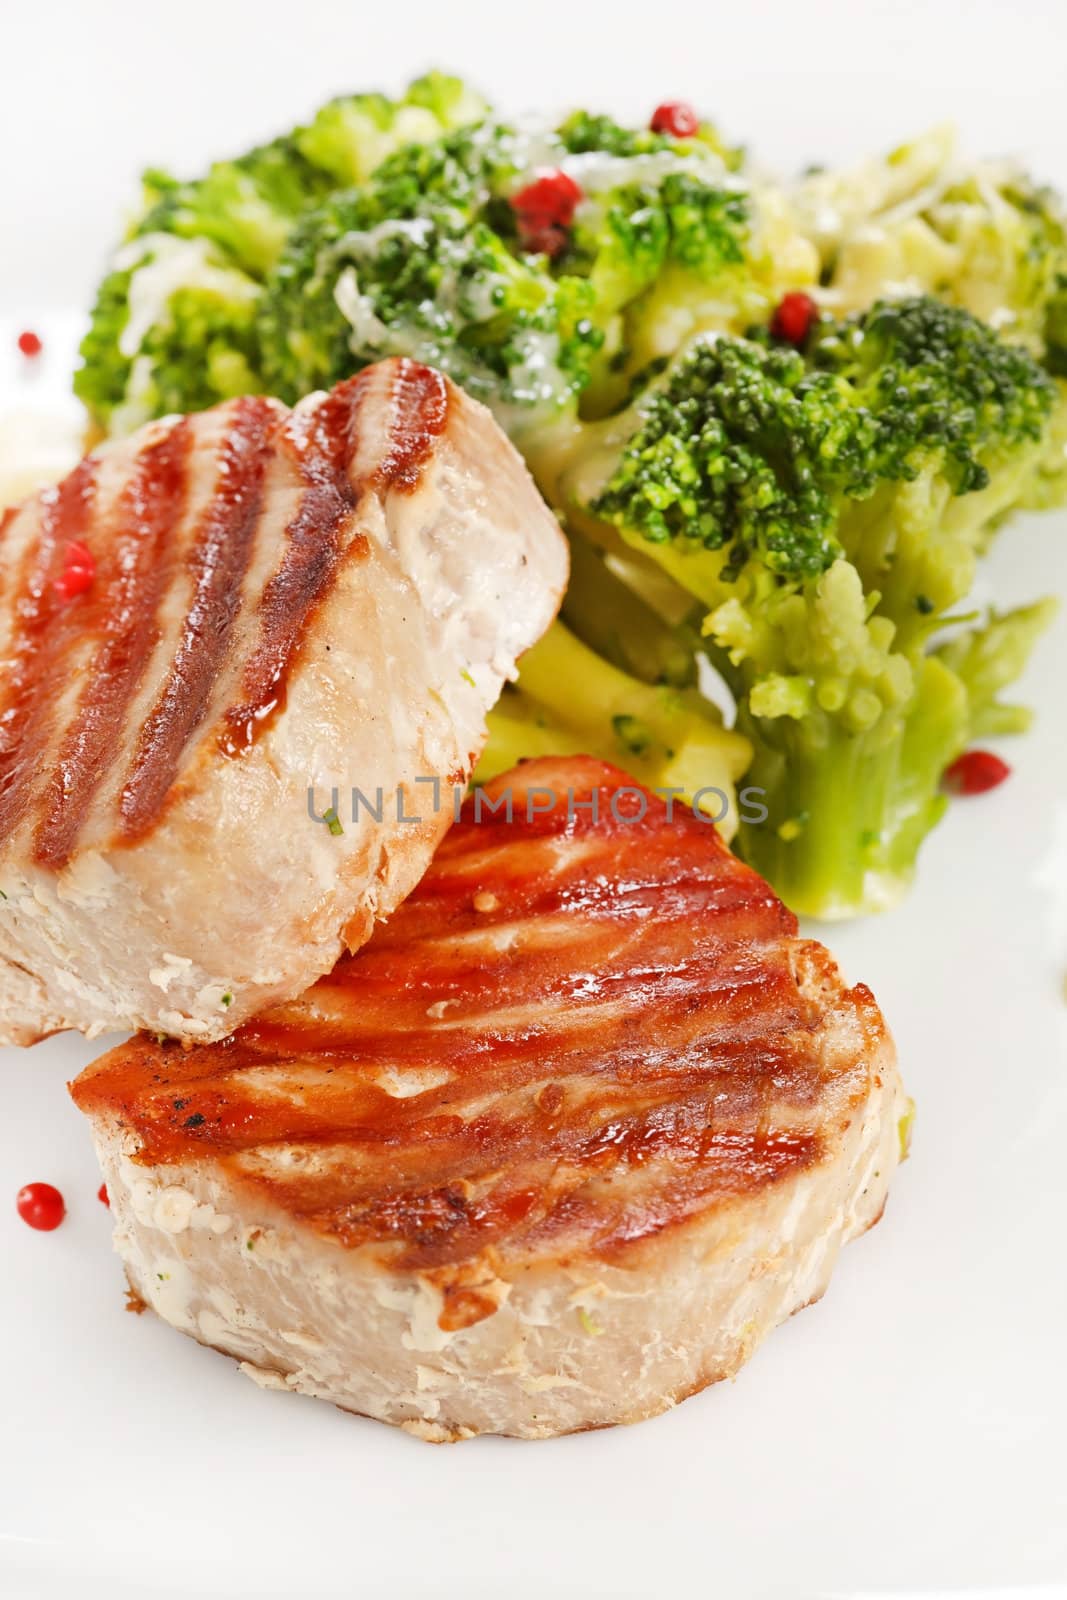 tuna steak with broccoli